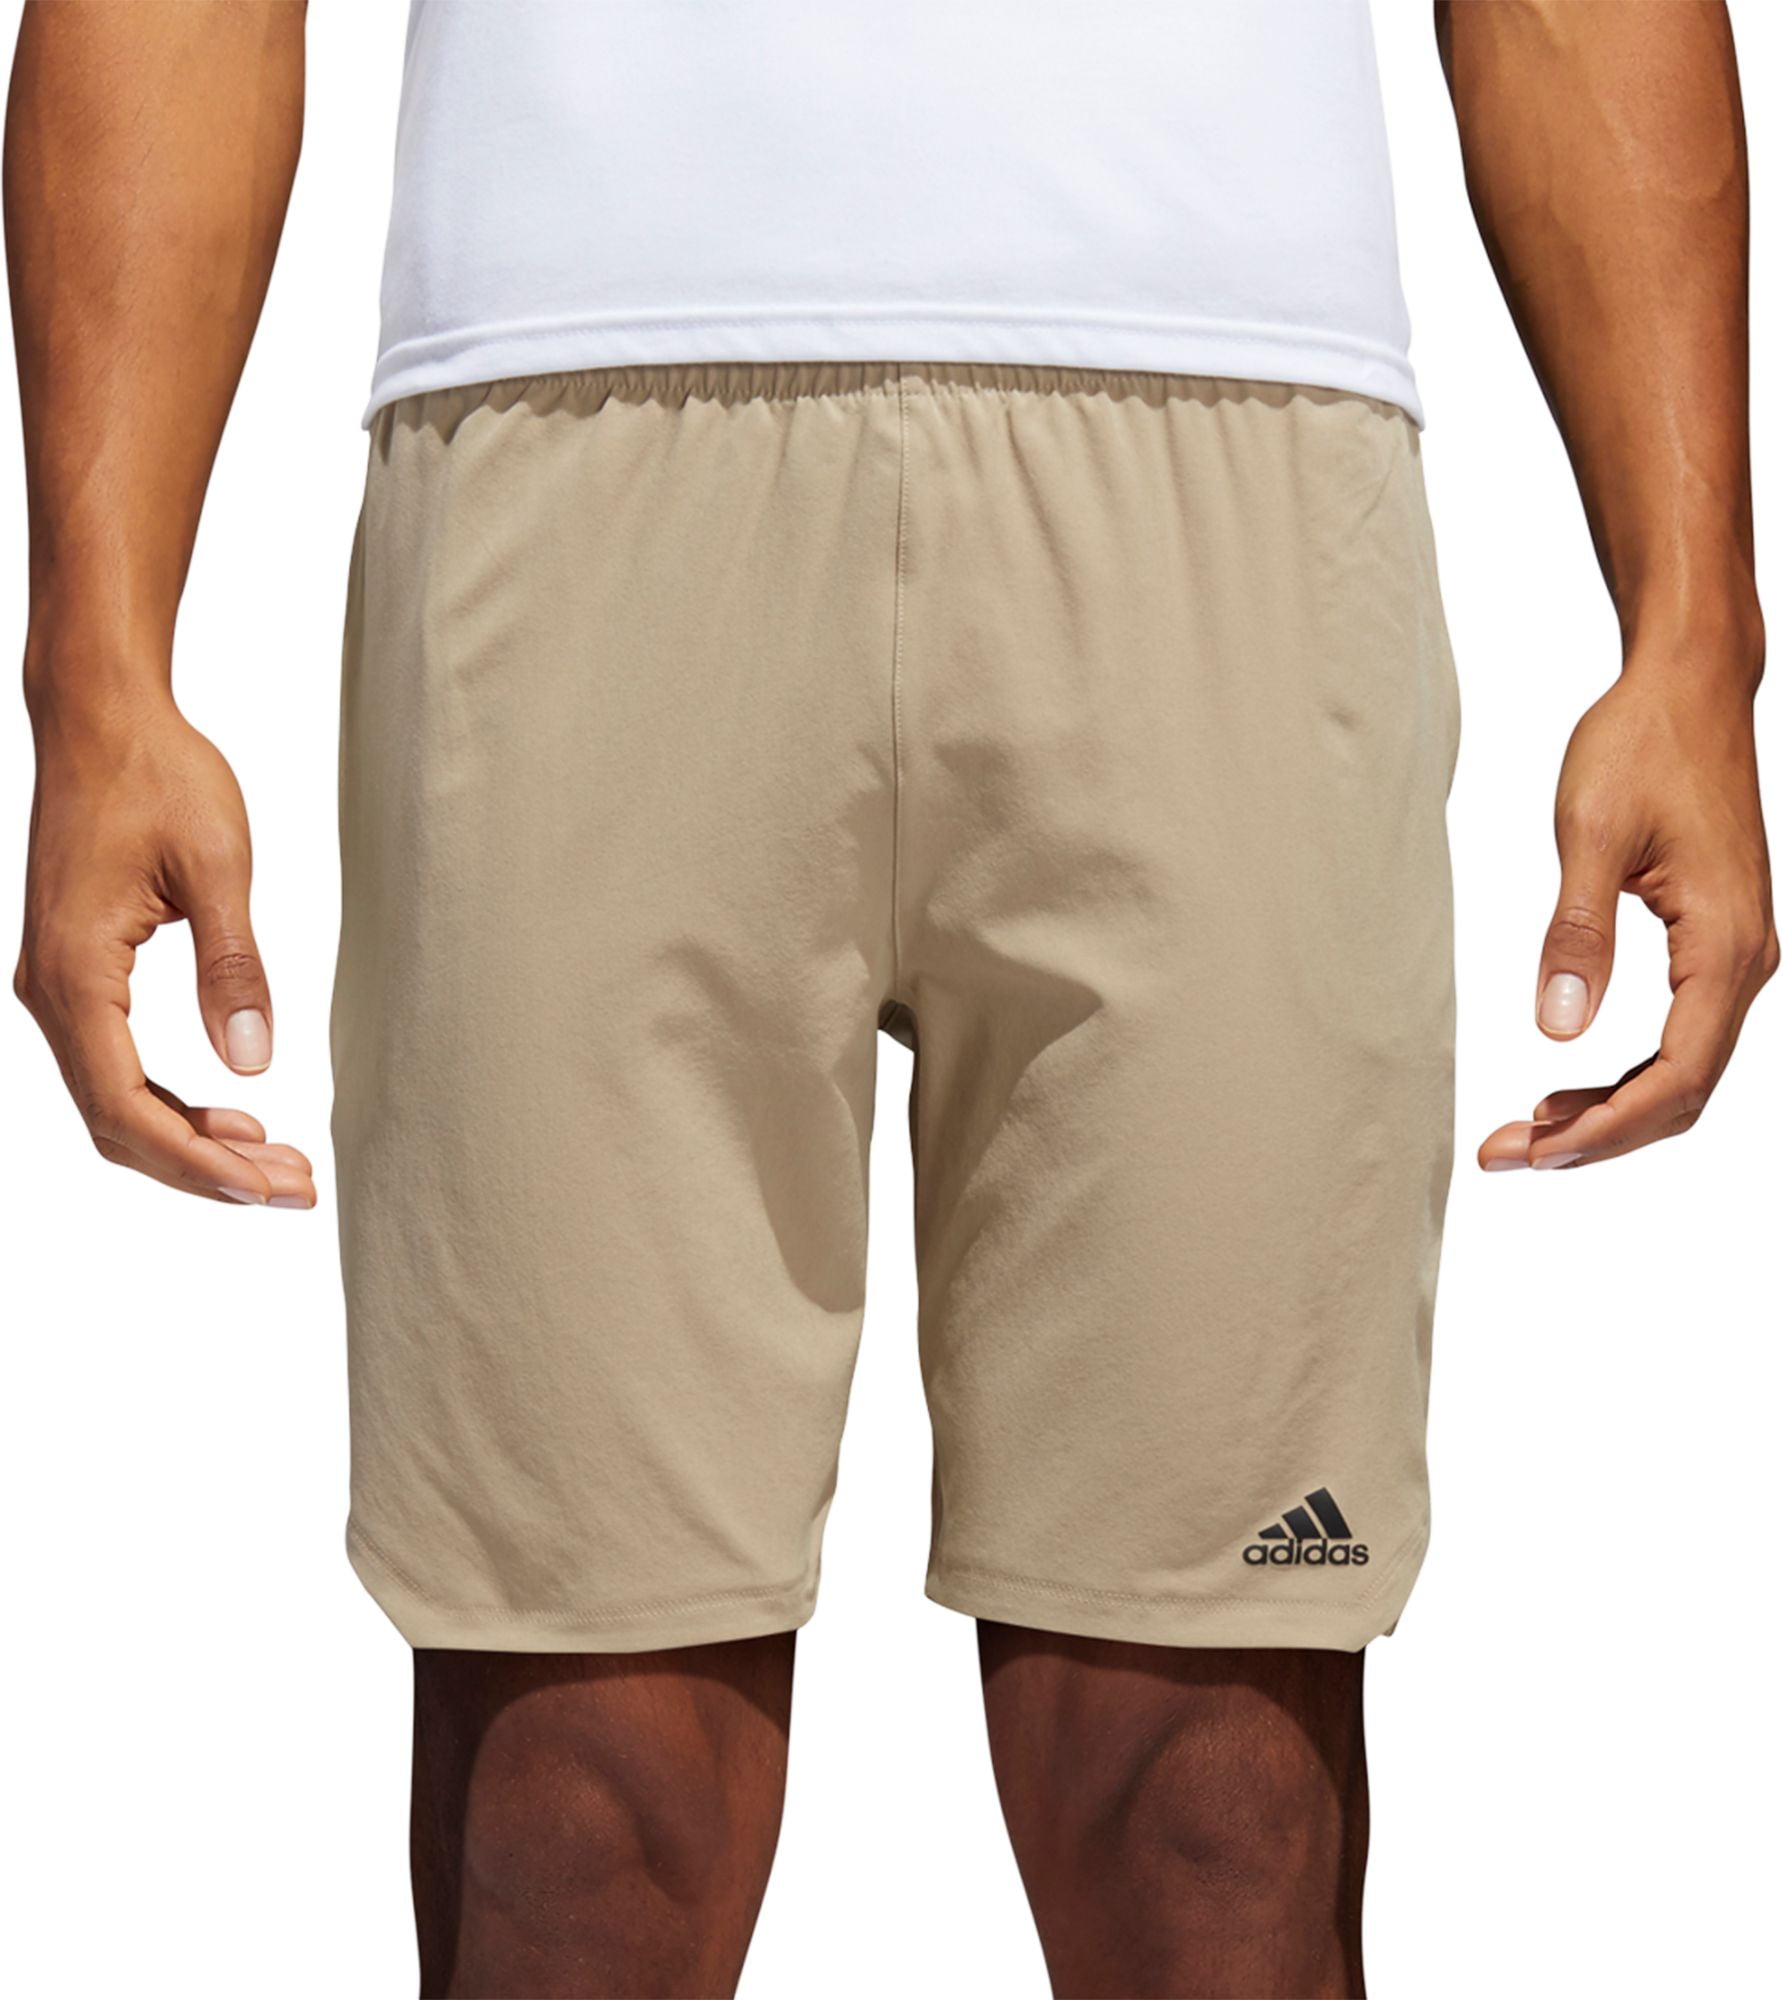 Adidas - adidas Men's Axis Woven Training Shorts - Walmart.com ...